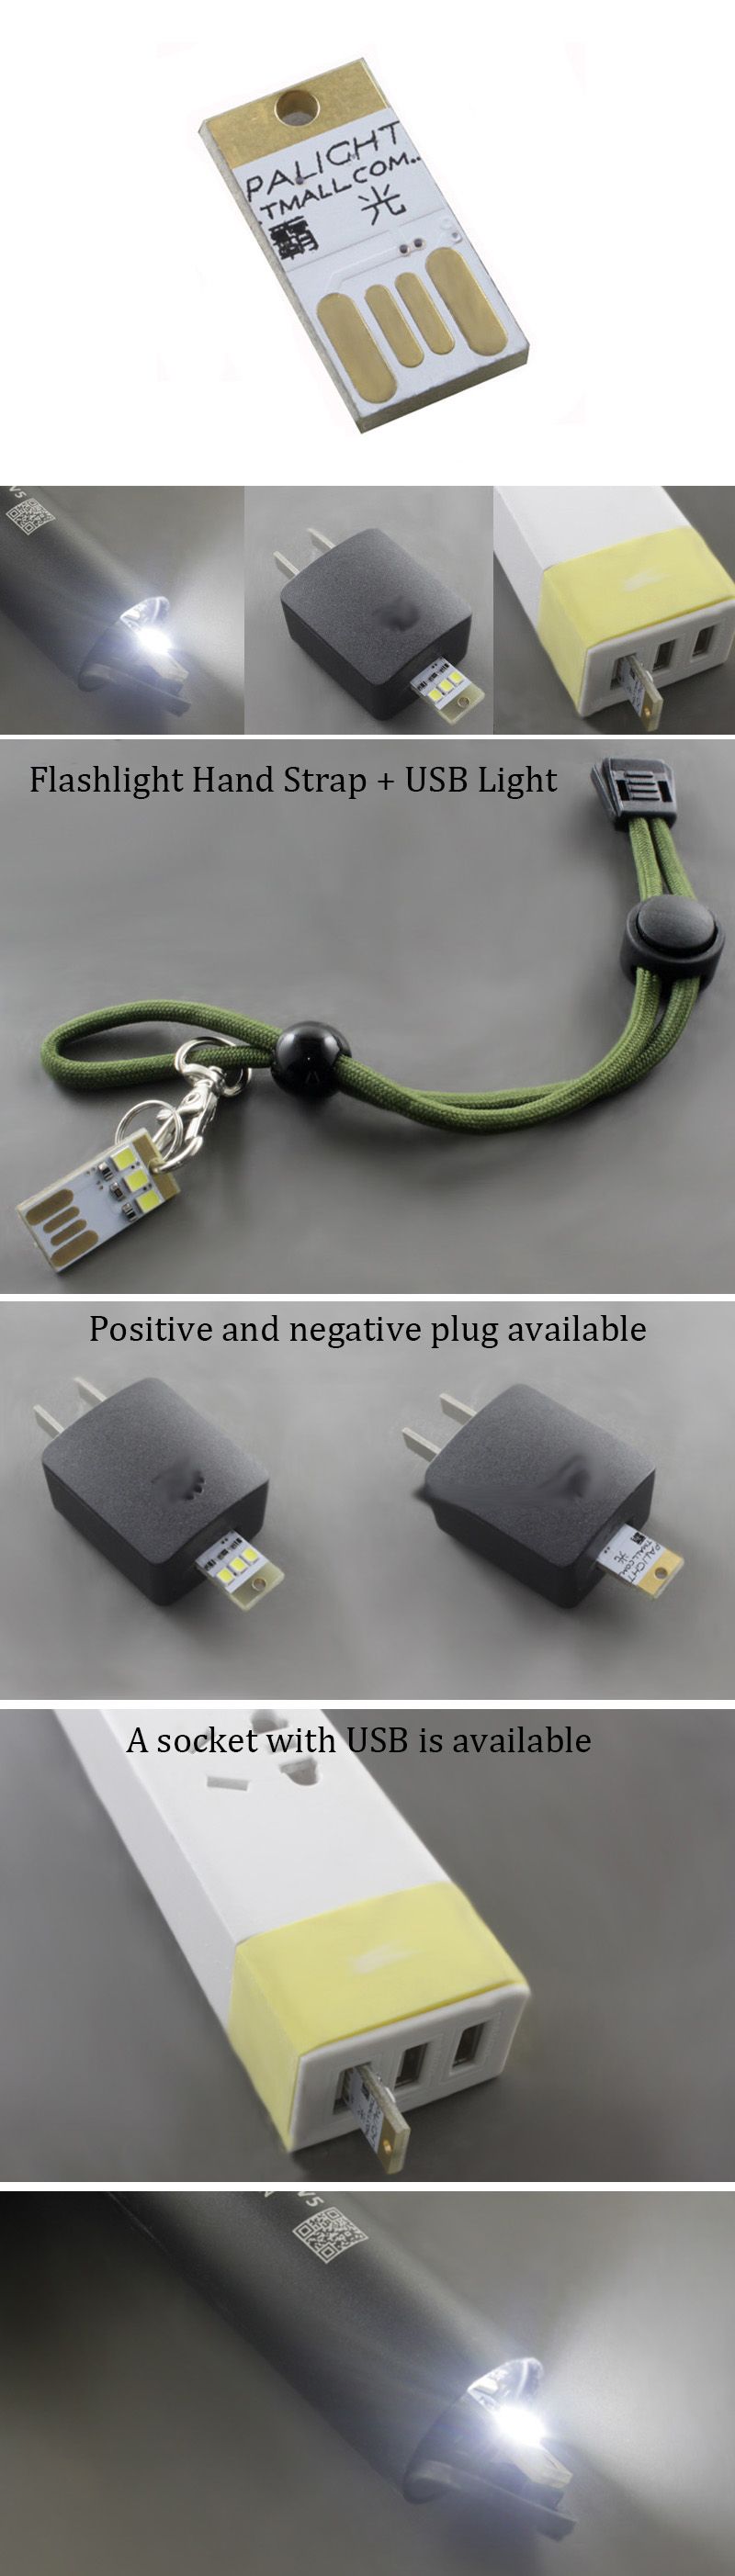 PALIGHT-Mini-USB-LED-Light-EDC-Flashlight-Two-Sides-Use-EDC-Camping-Lamp-Hunting-Portable-Emergency--1436882